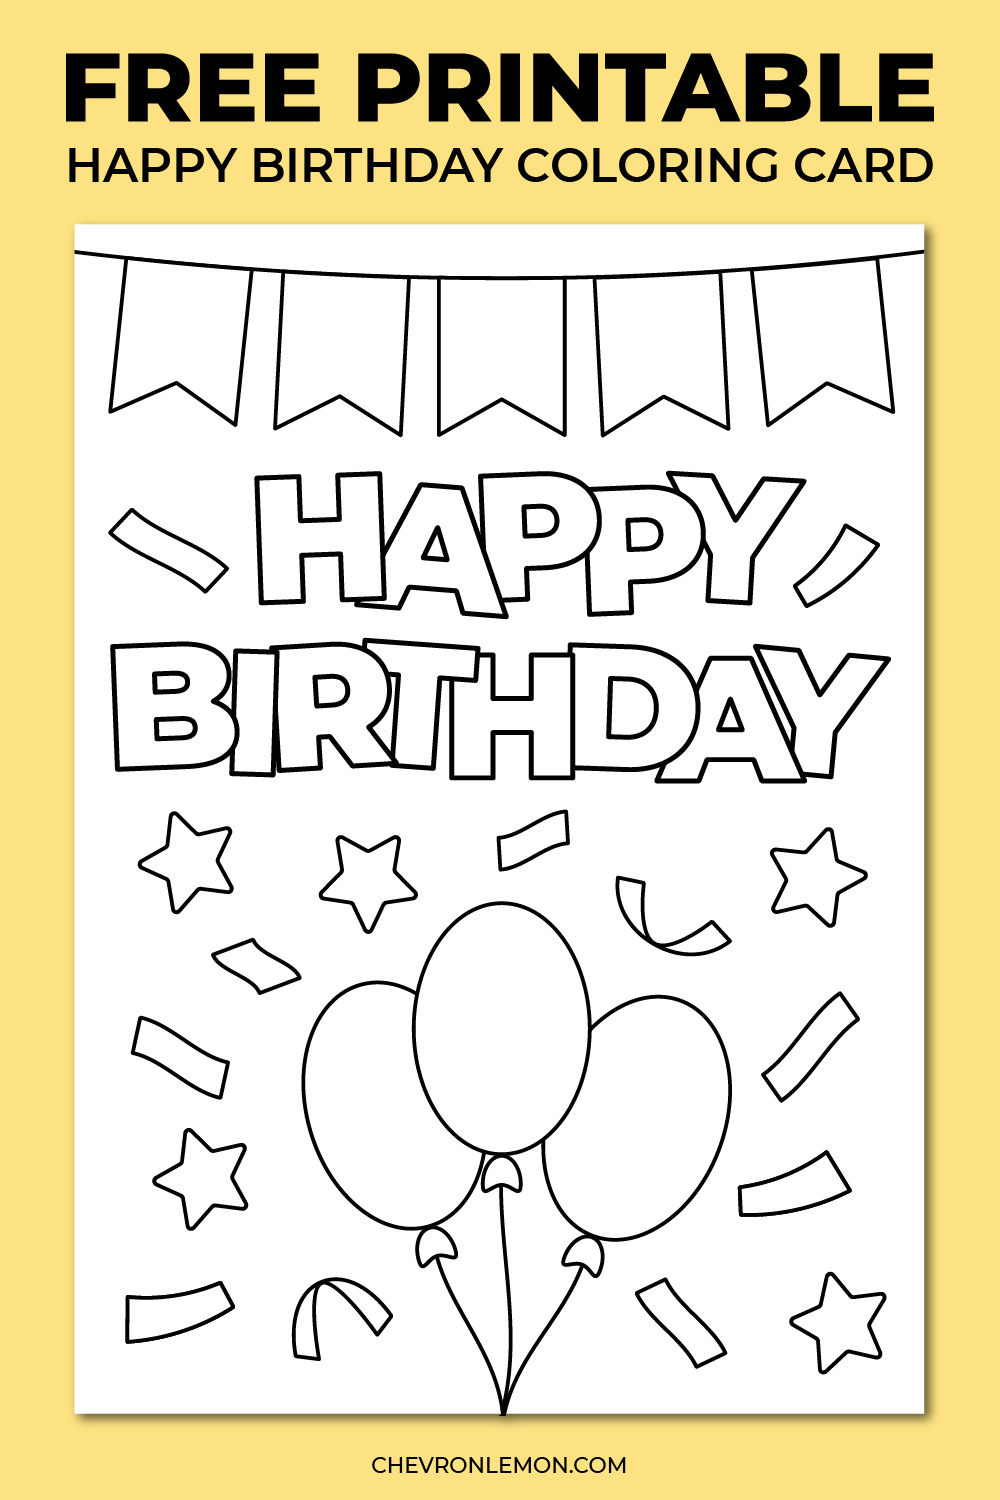 Printable Happy Birthday coloring card